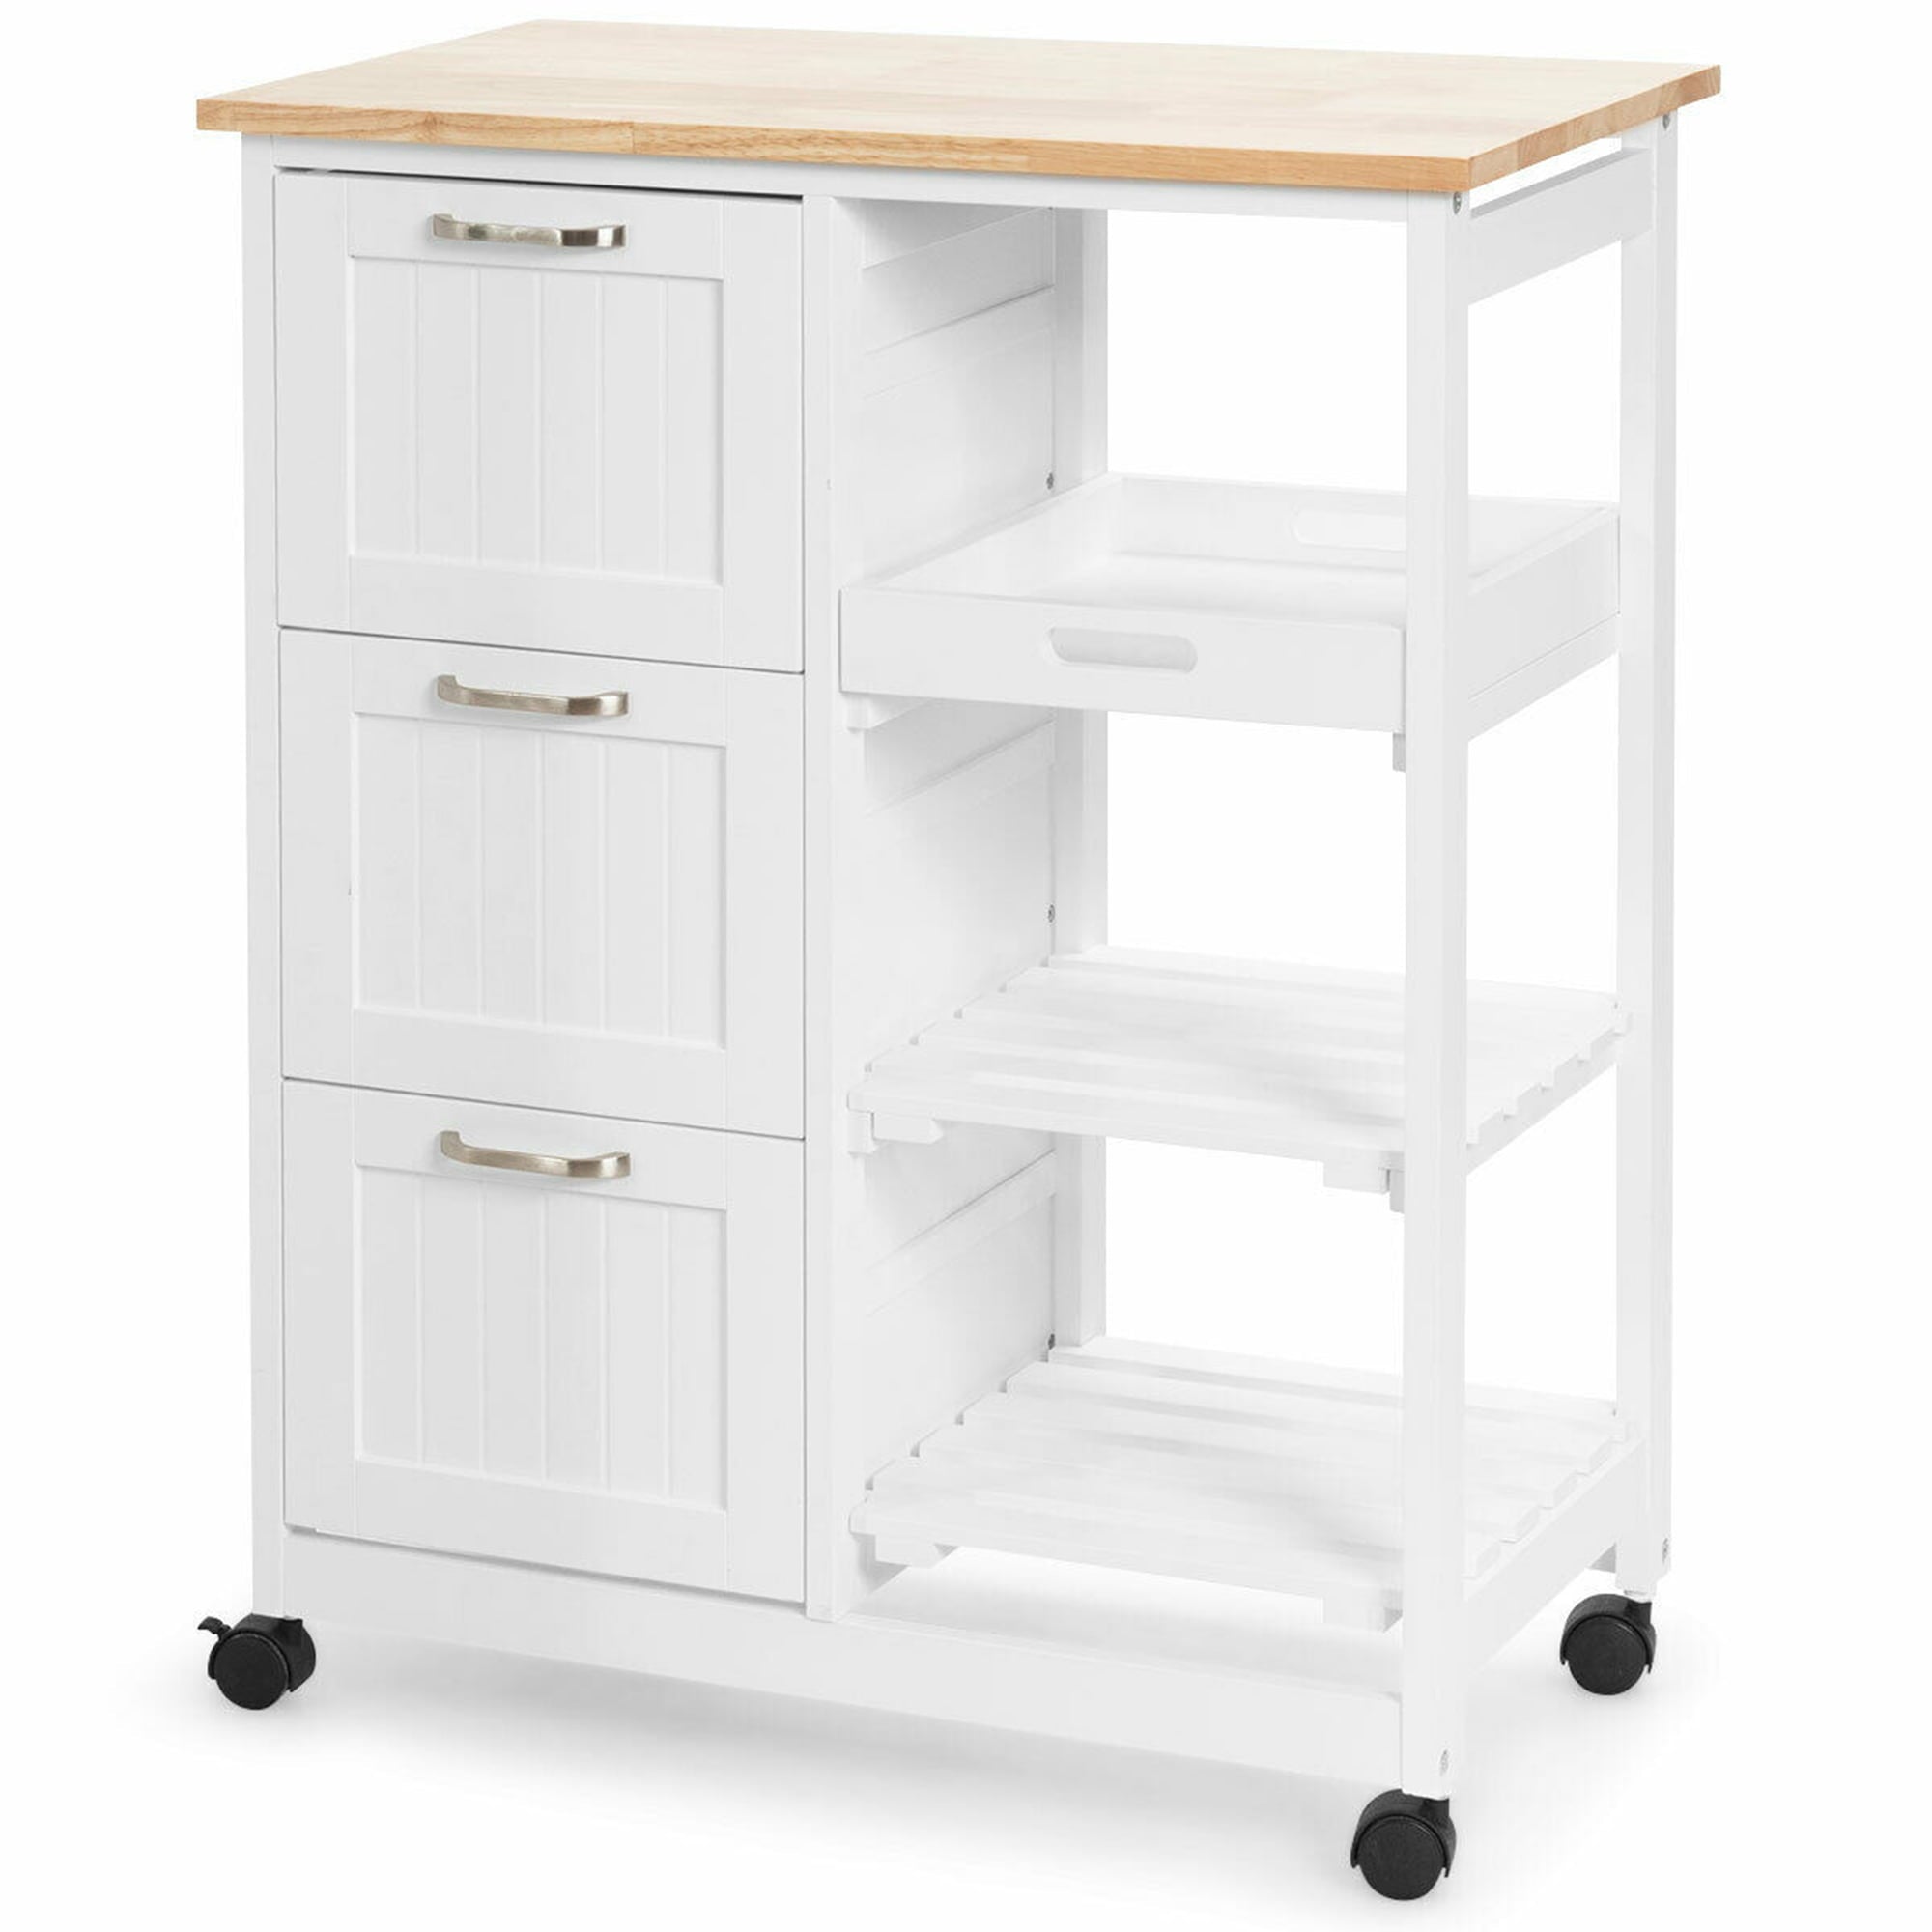 Gymax Rolling Kitchen Island Utility Storage Cart w/ 3 Storage Drawers and Shelves White